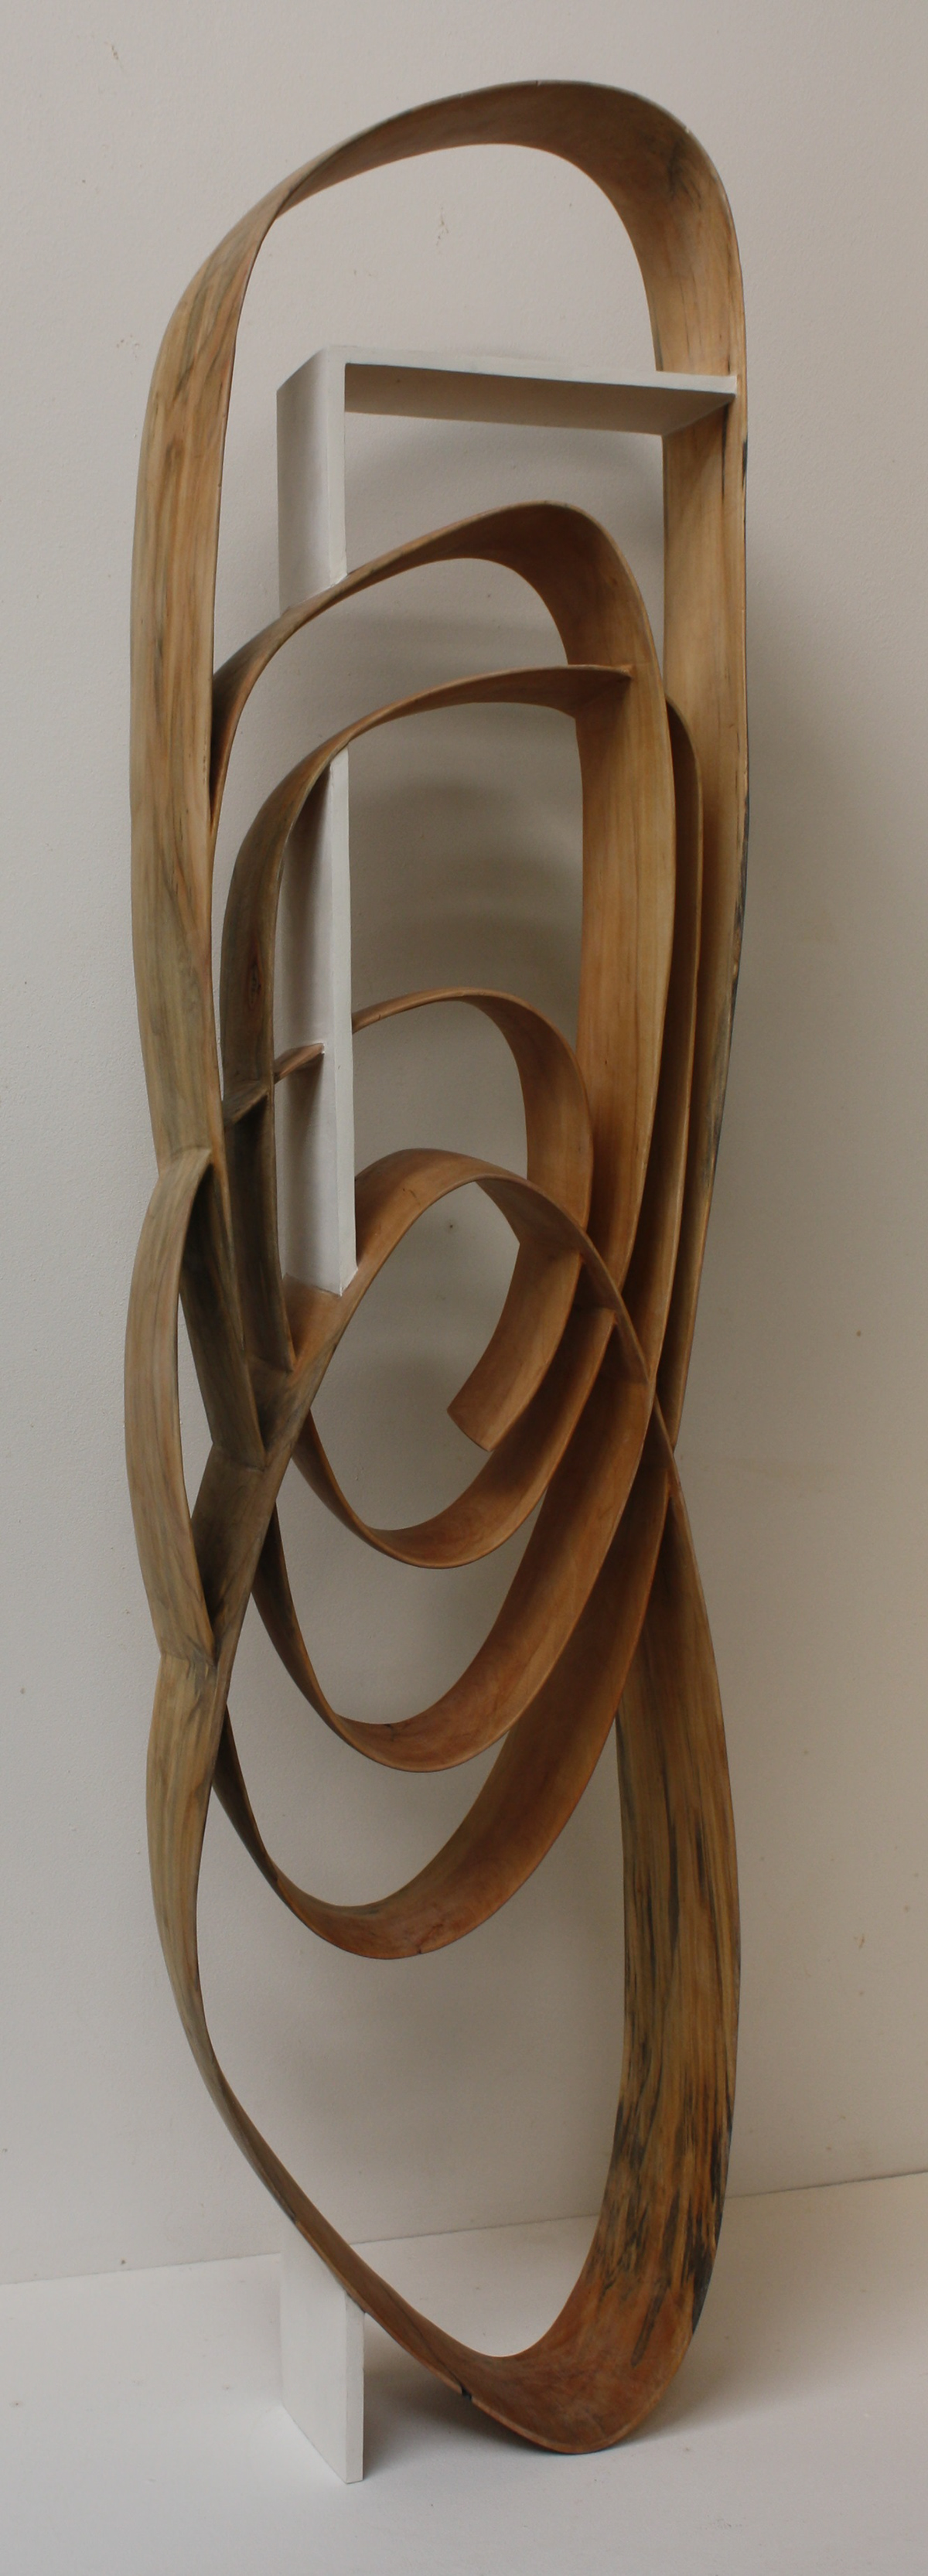 contemporary art escultura Fusta  madera sculpture wood woodcarving woodworking